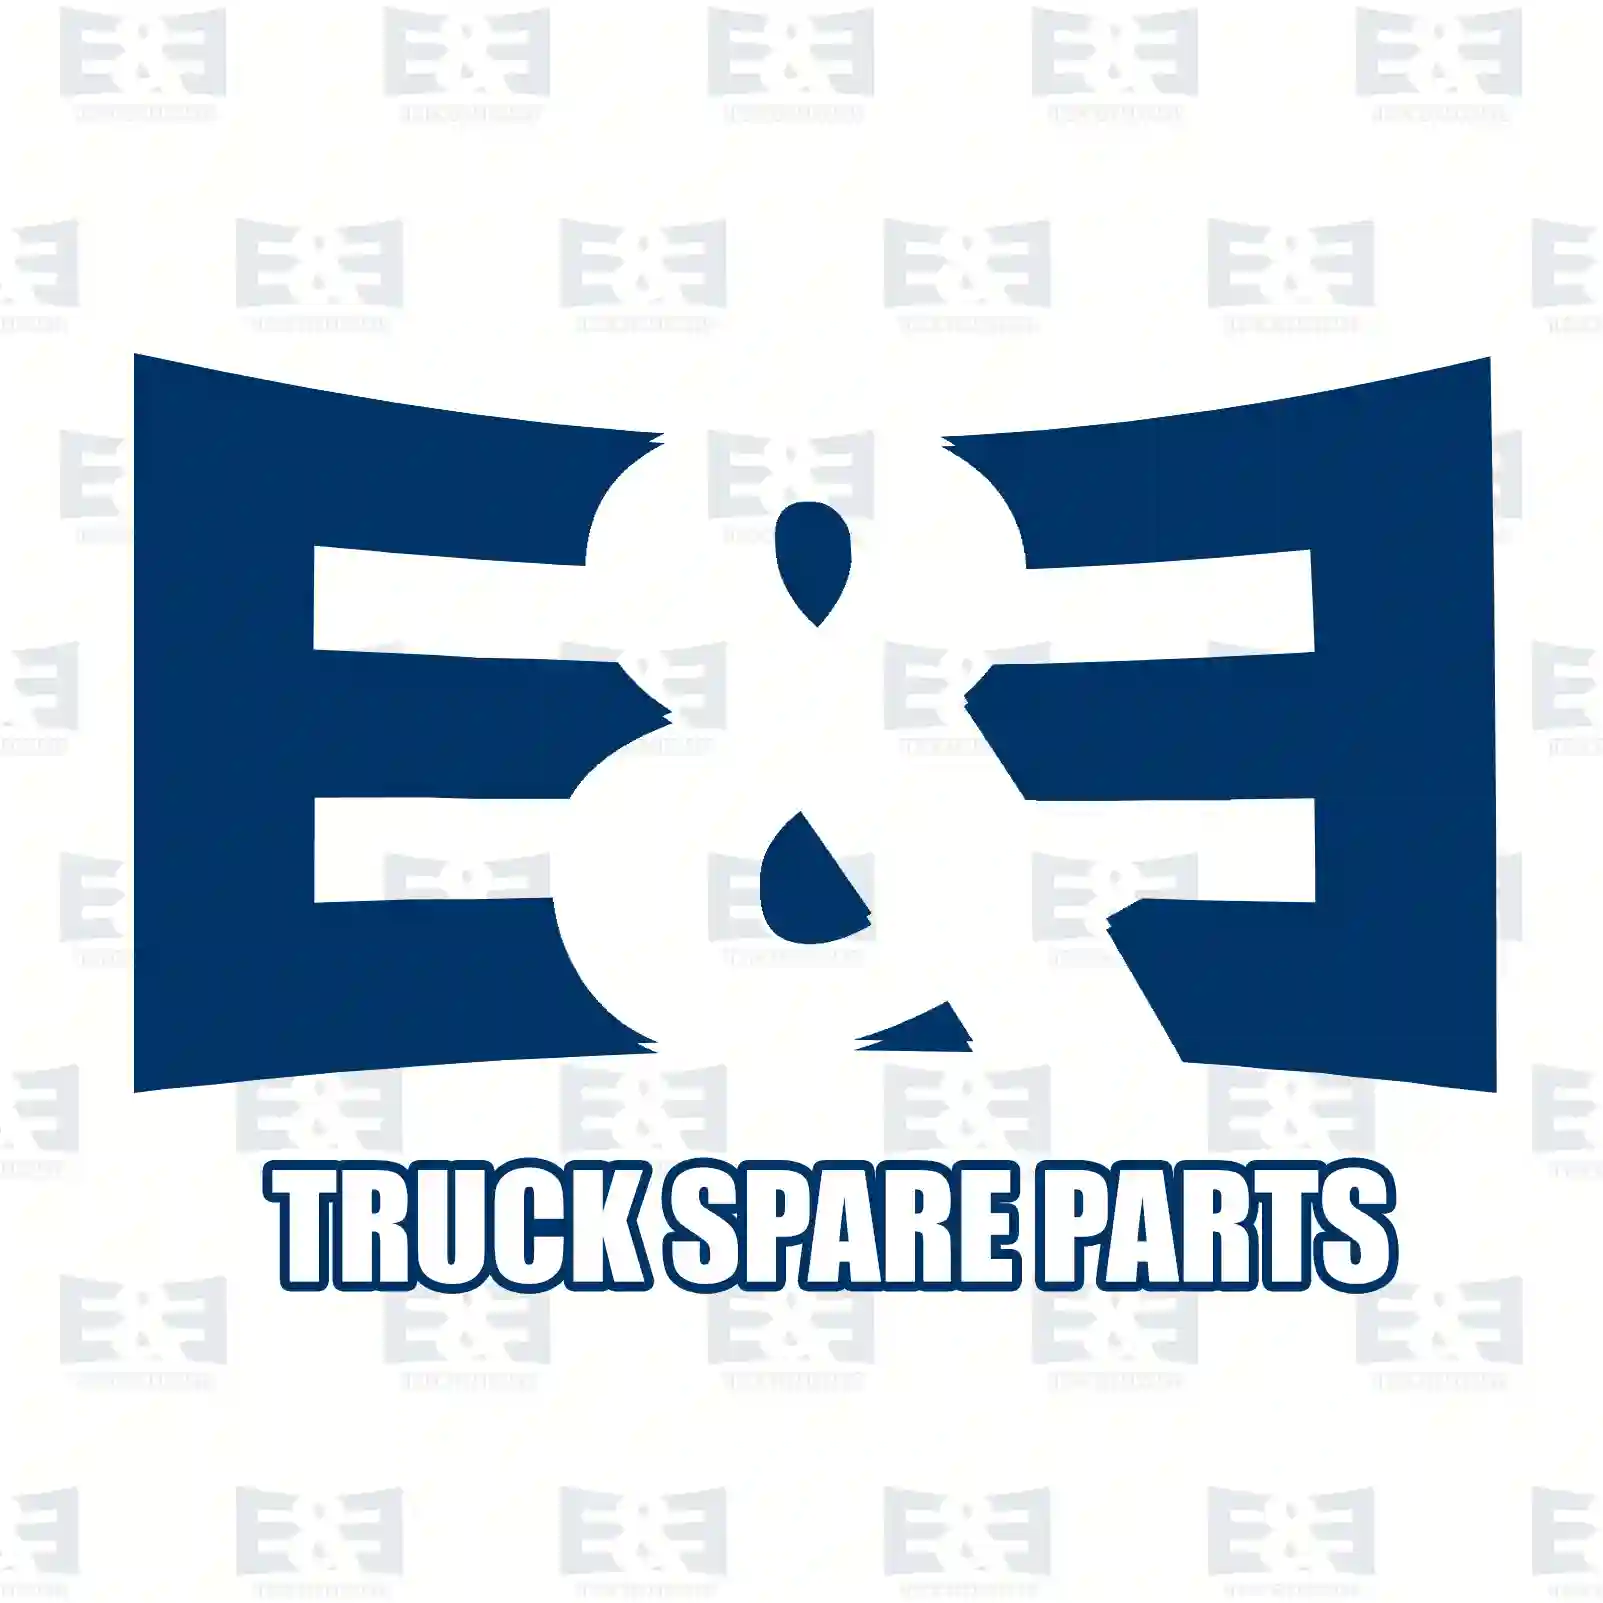 Clutch cylinder, 2E2287000, 500398367, 504060023, 5801446199 ||  2E2287000 E&E Truck Spare Parts | Truck Spare Parts, Auotomotive Spare Parts Clutch cylinder, 2E2287000, 500398367, 504060023, 5801446199 ||  2E2287000 E&E Truck Spare Parts | Truck Spare Parts, Auotomotive Spare Parts